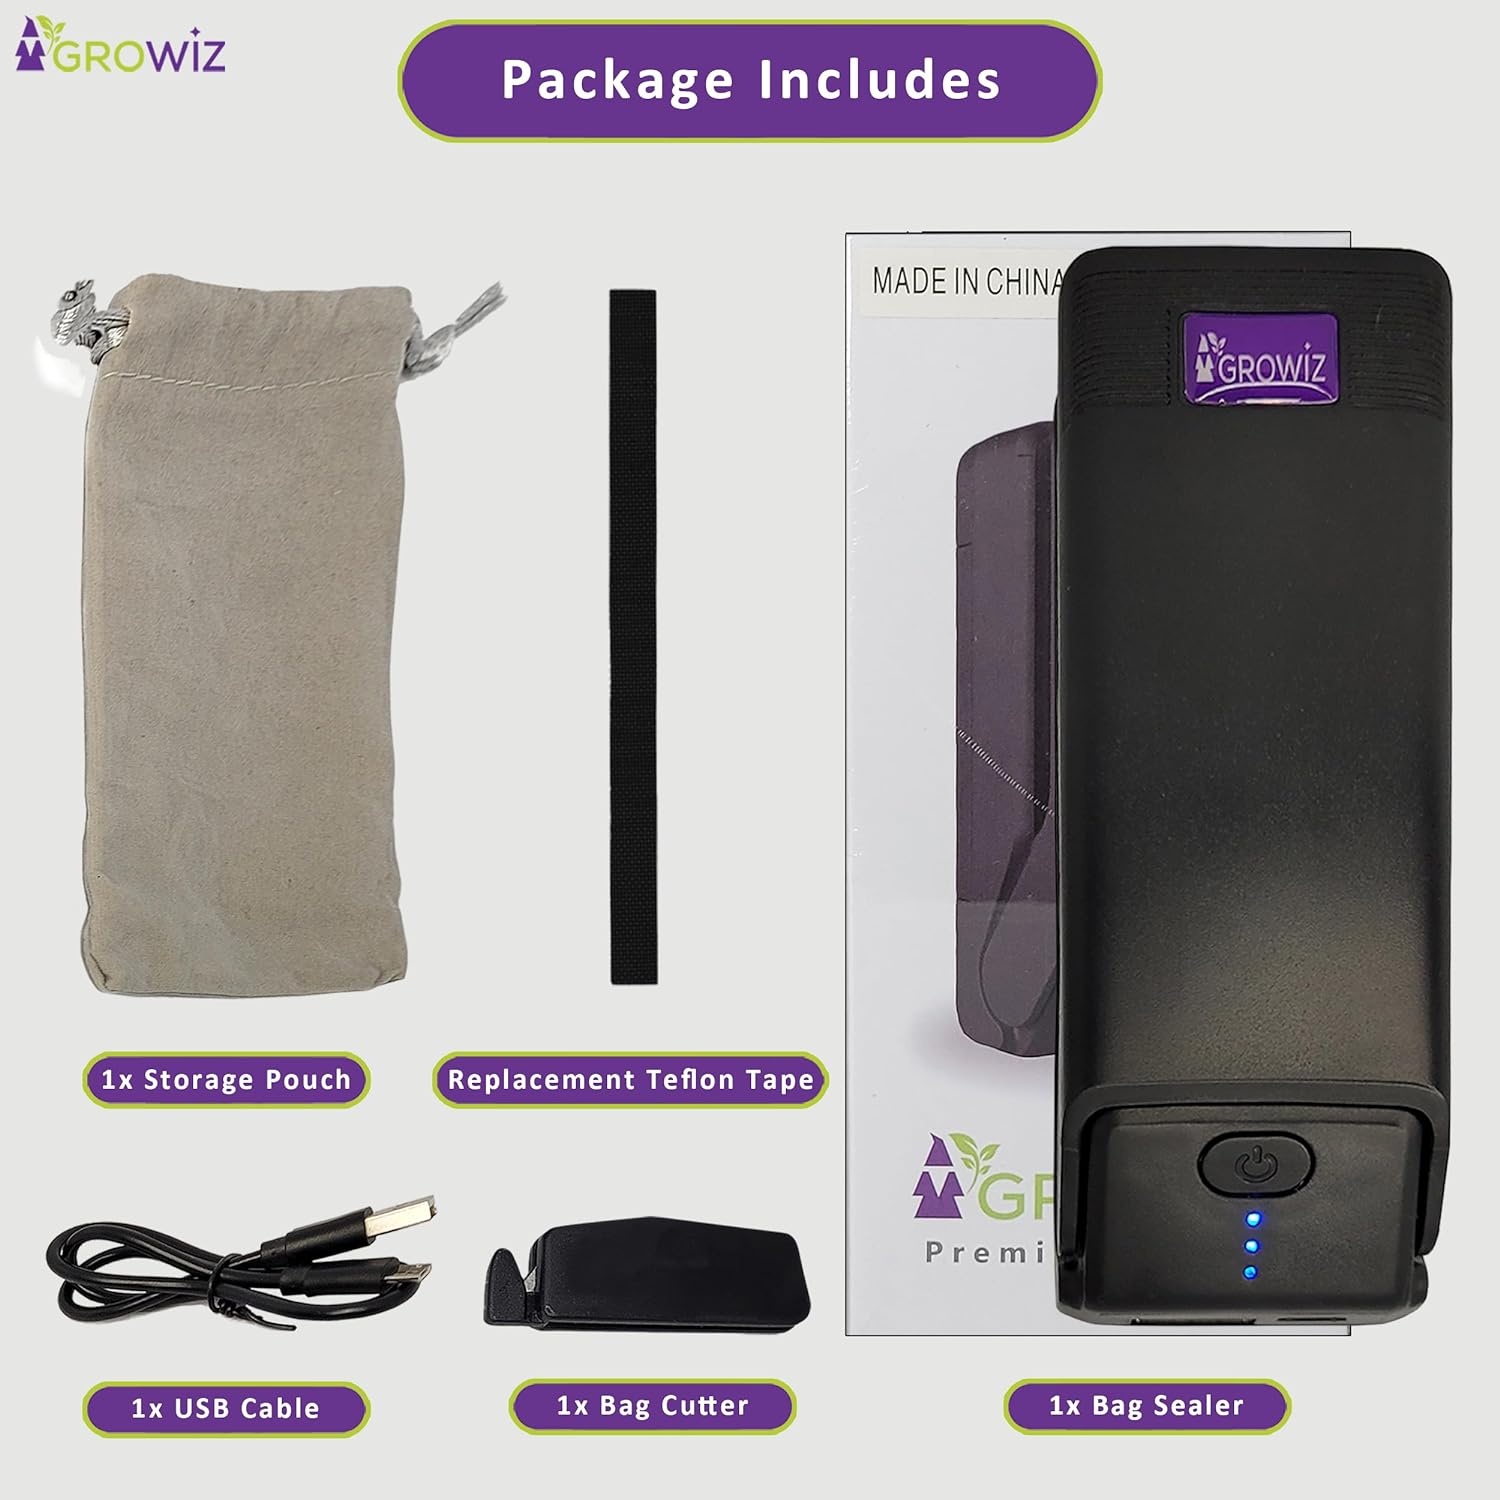 Gro Wiz 7 Watts 2 In 1 Portable Bag Sealer Rechargeable 5V 1200 mAh Battery & Bag Cutter, 3 Heat Sealer Settings Mini Bag Resealer for Chip Bags Kitchen Gadgets